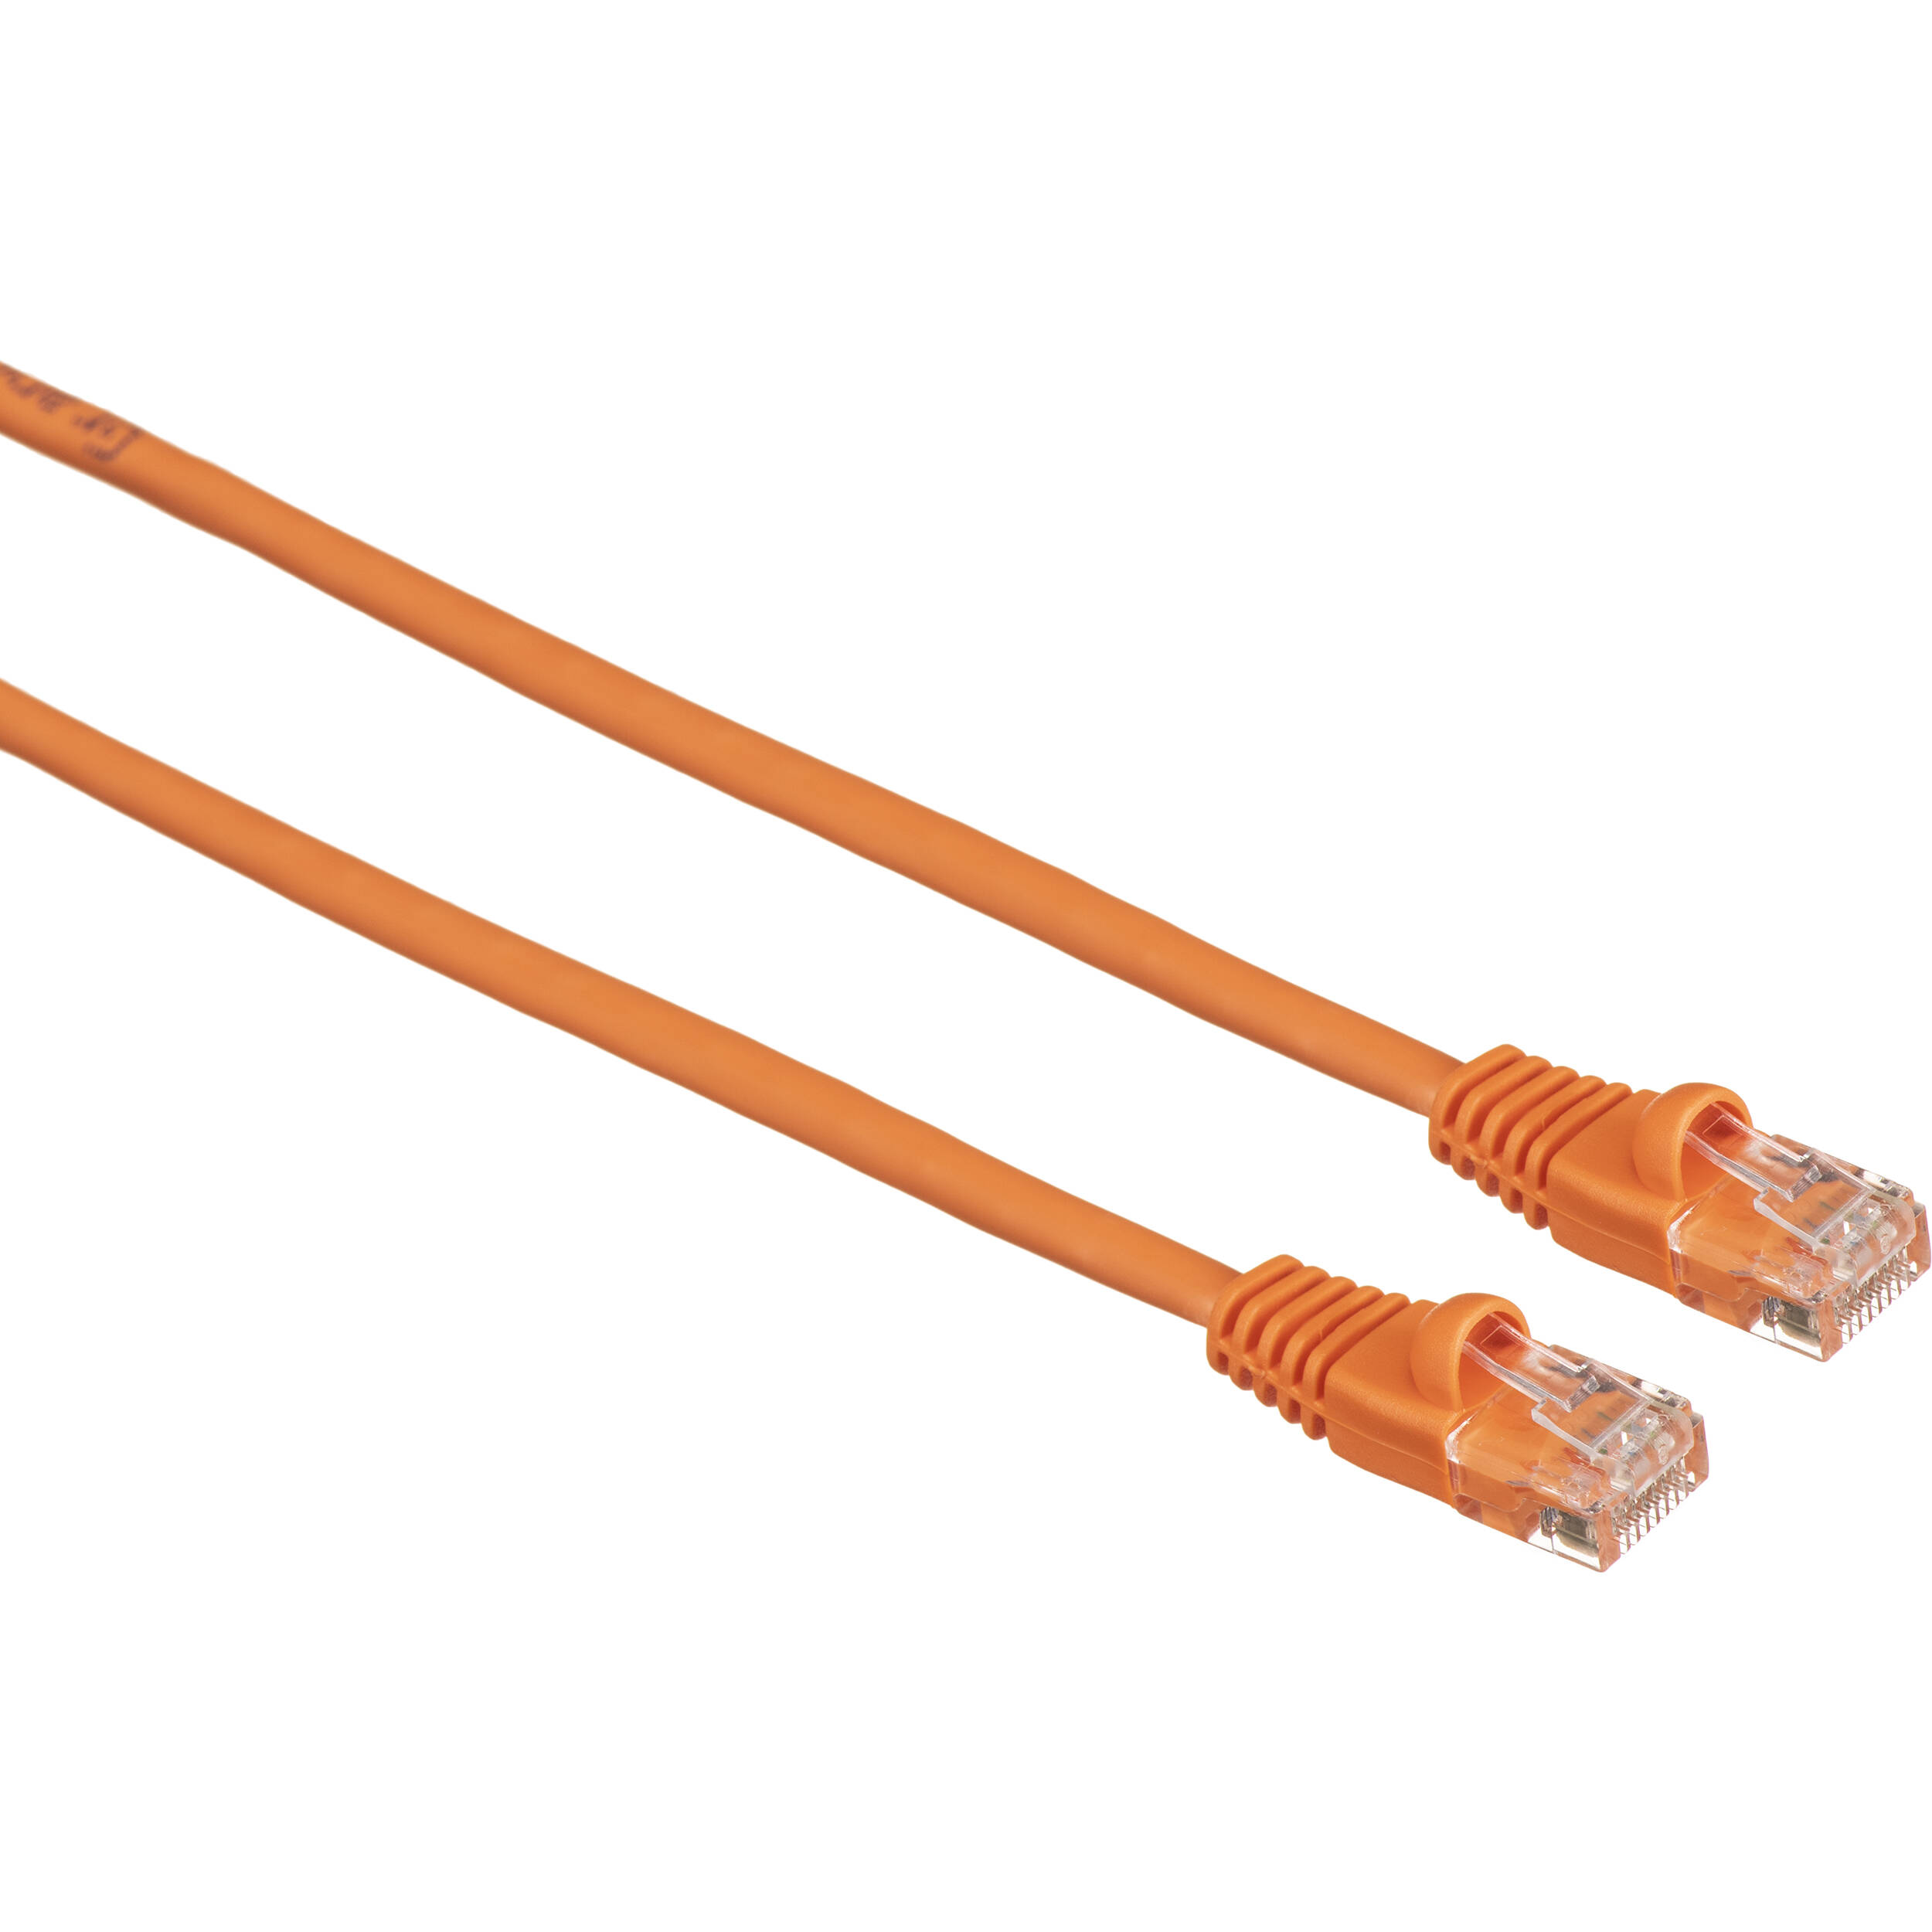 Comprehensive Cat5e 350 MHz Snagless Patch Cable (100', Orange)